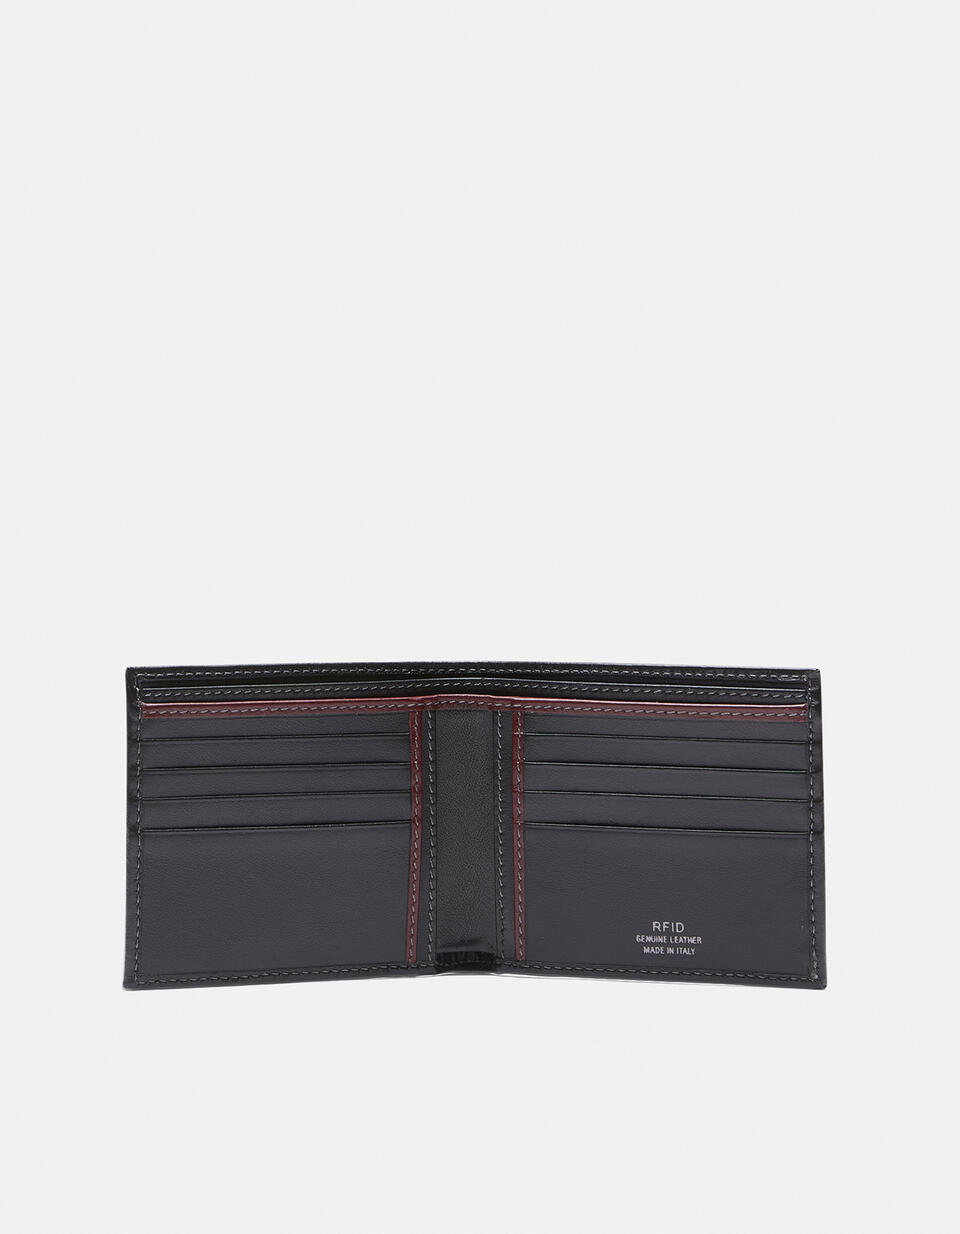 Adam  basic wallet - Women's Wallets - Men's Wallets | Wallets NEROBORDEAUX - Women's Wallets - Men's Wallets | WalletsCuoieria Fiorentina